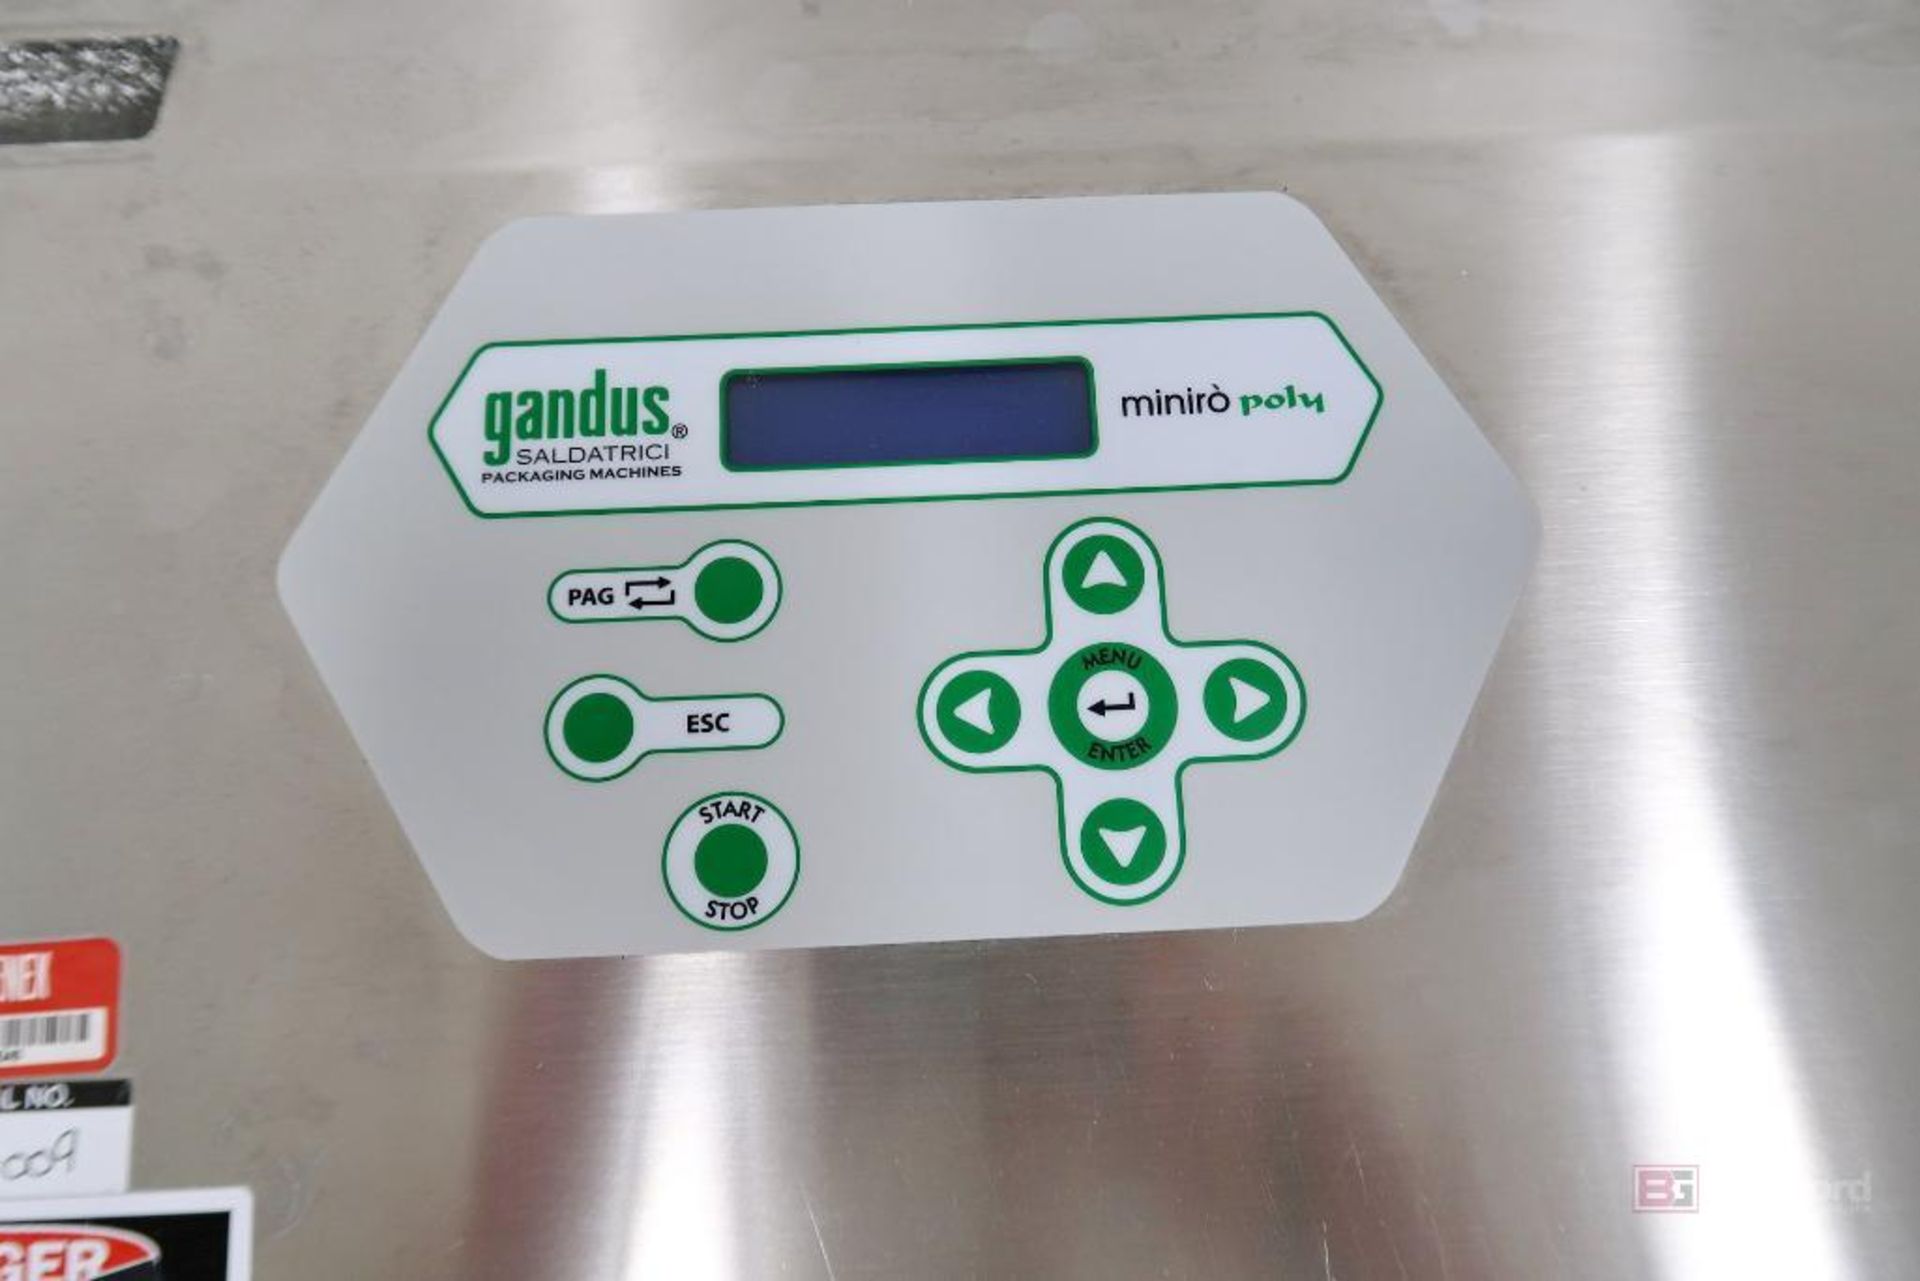 Gandus Saldatrici Miniro Poly Packaging machine - Image 2 of 4